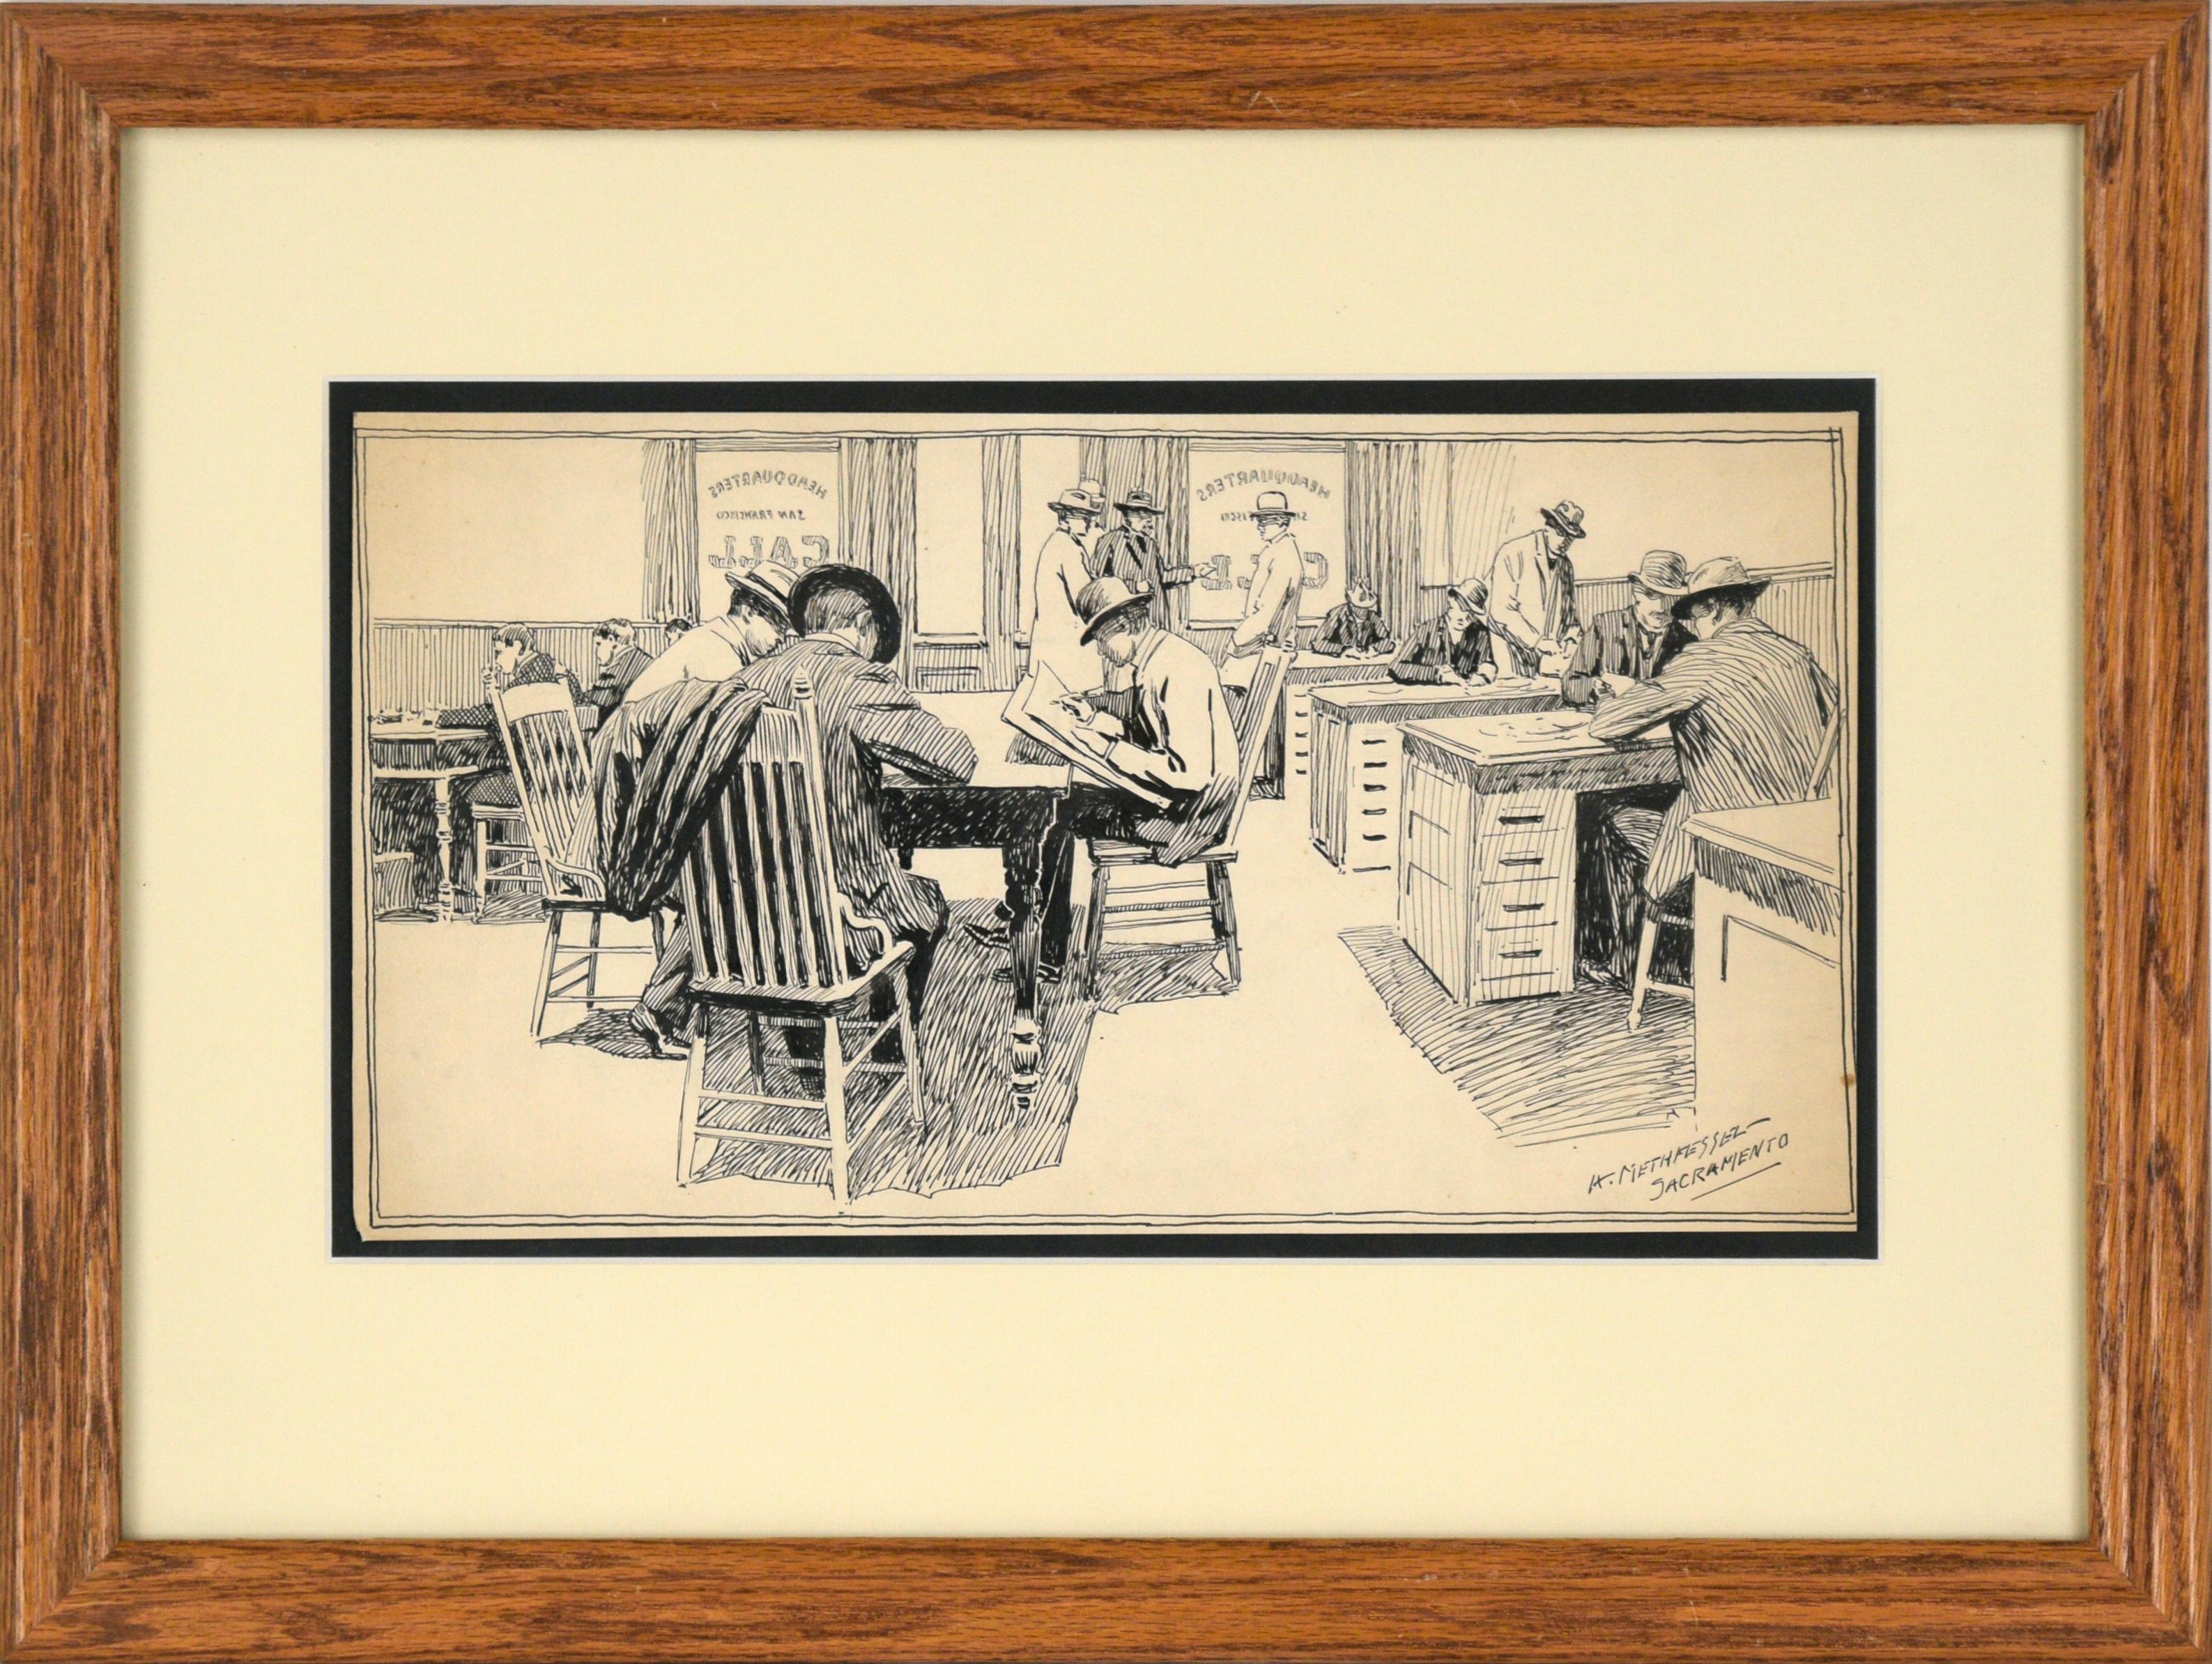 The Illustrator's Workroom at The San Francisco Call (L'atelier d'illustrateur au San Francisco Call), fin du 19e siècle Illustration